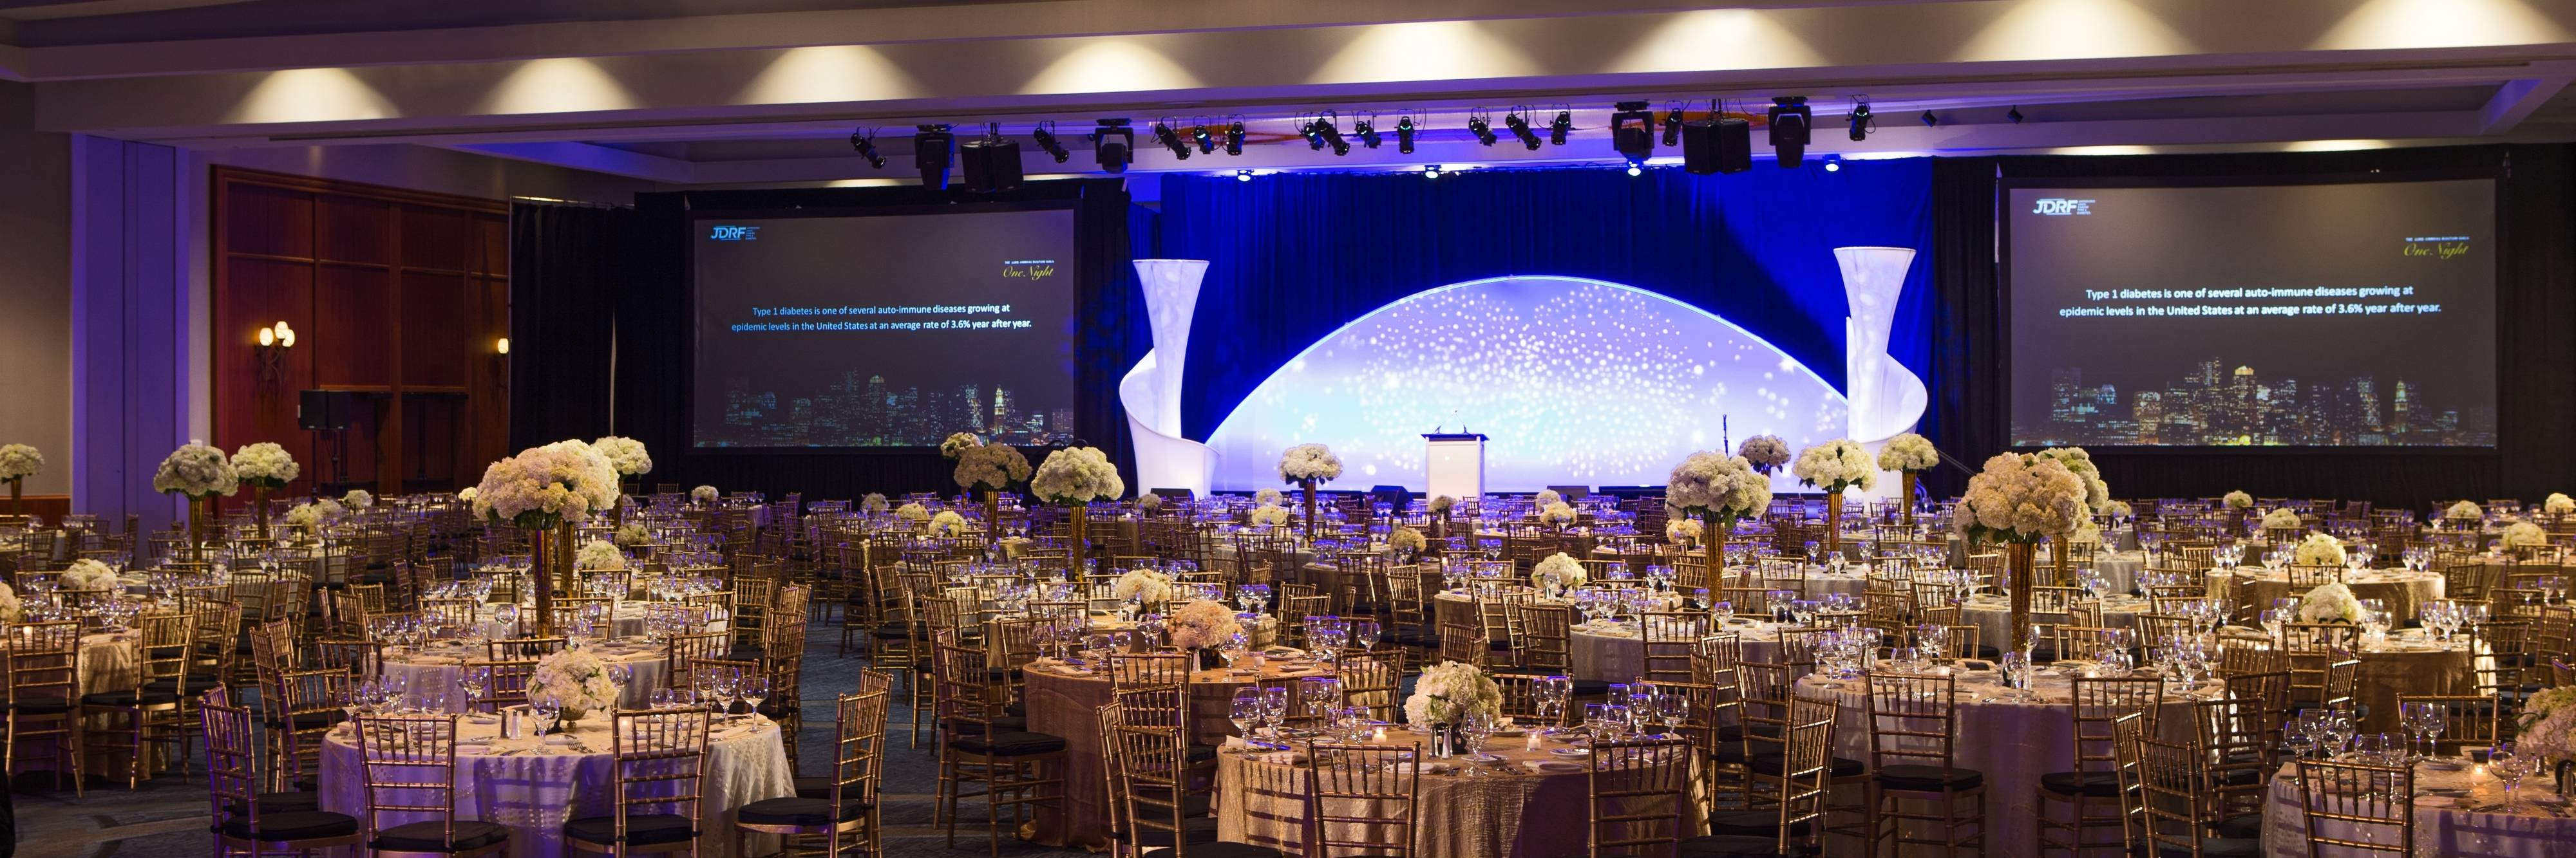 Grand ballroom banquet setup 